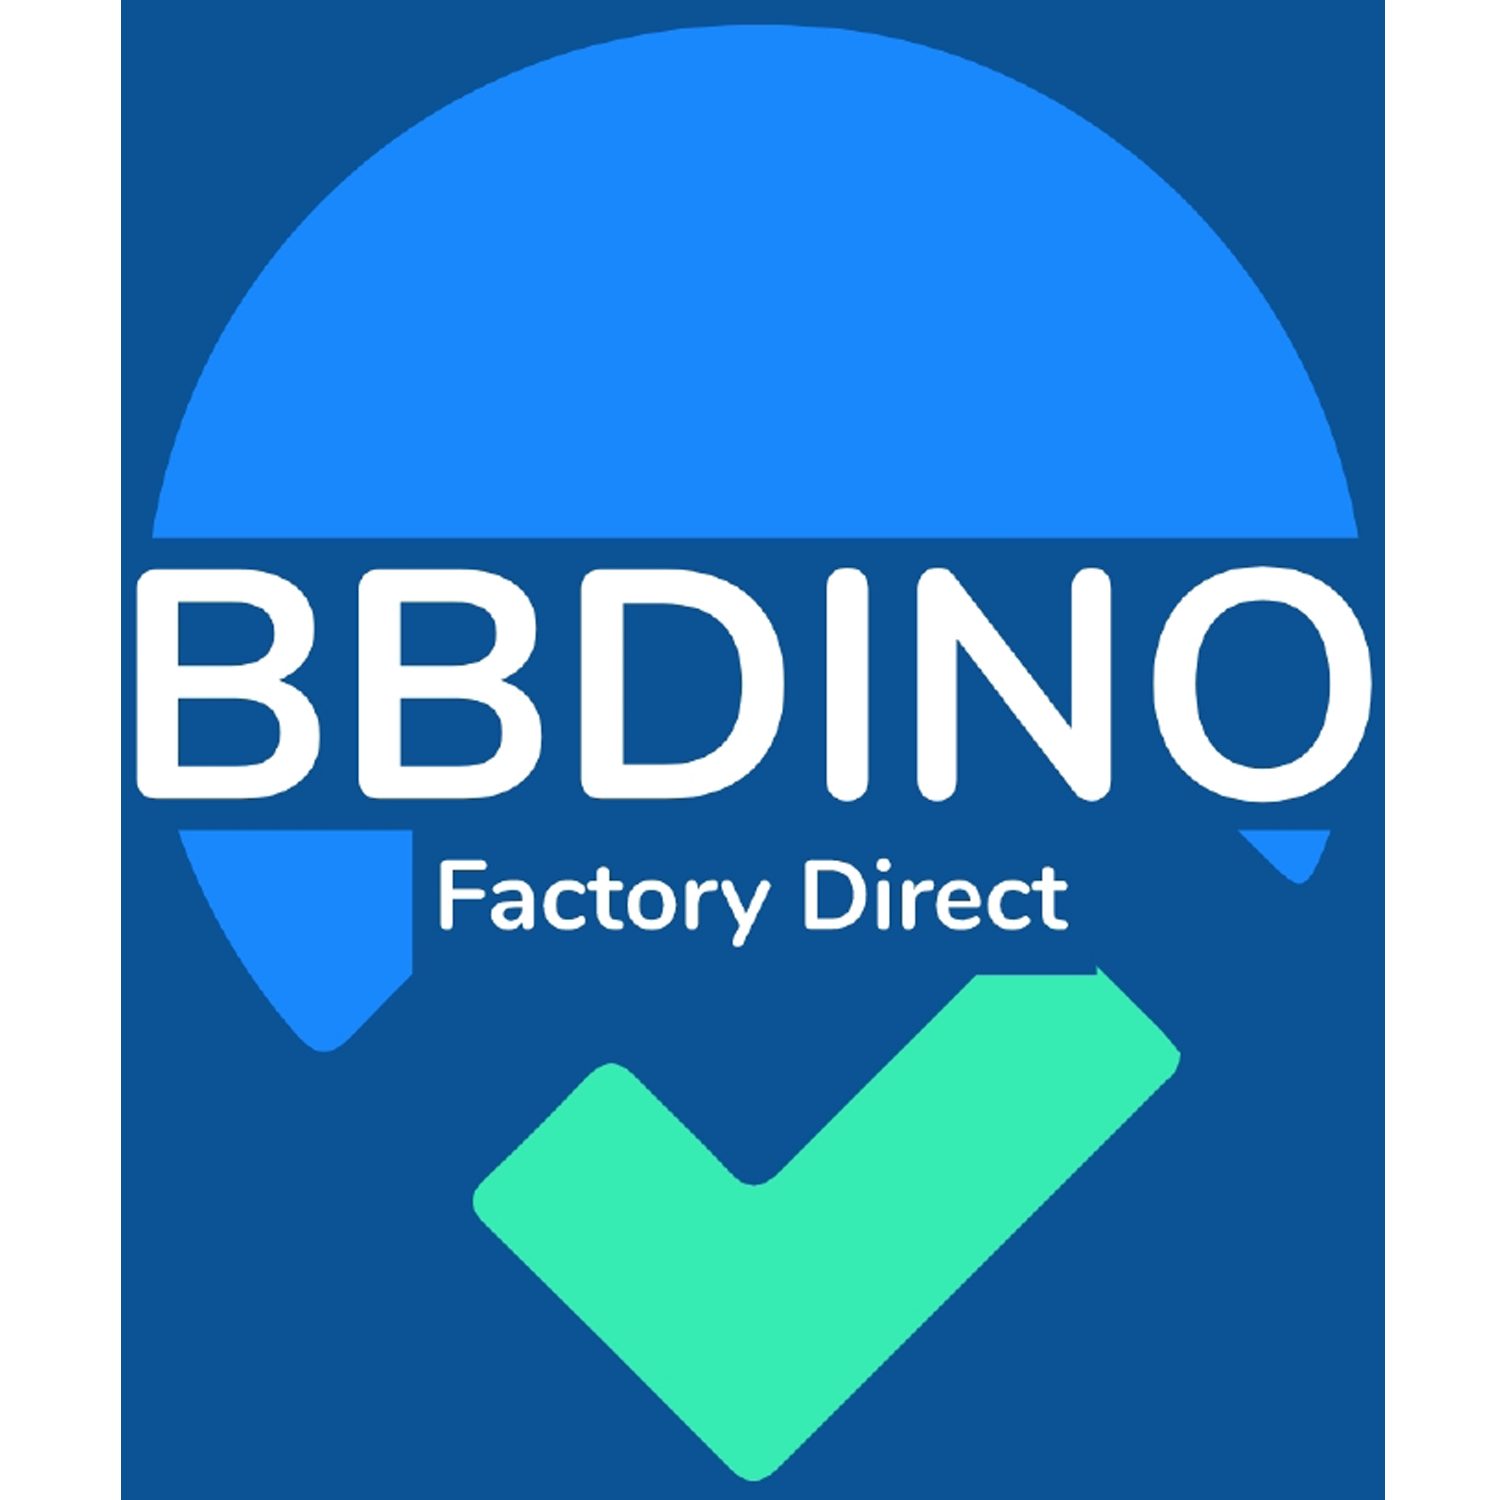 BBDINO 15A Platinum Silicone Mold Making Rubber Kit – BBDINO Direct